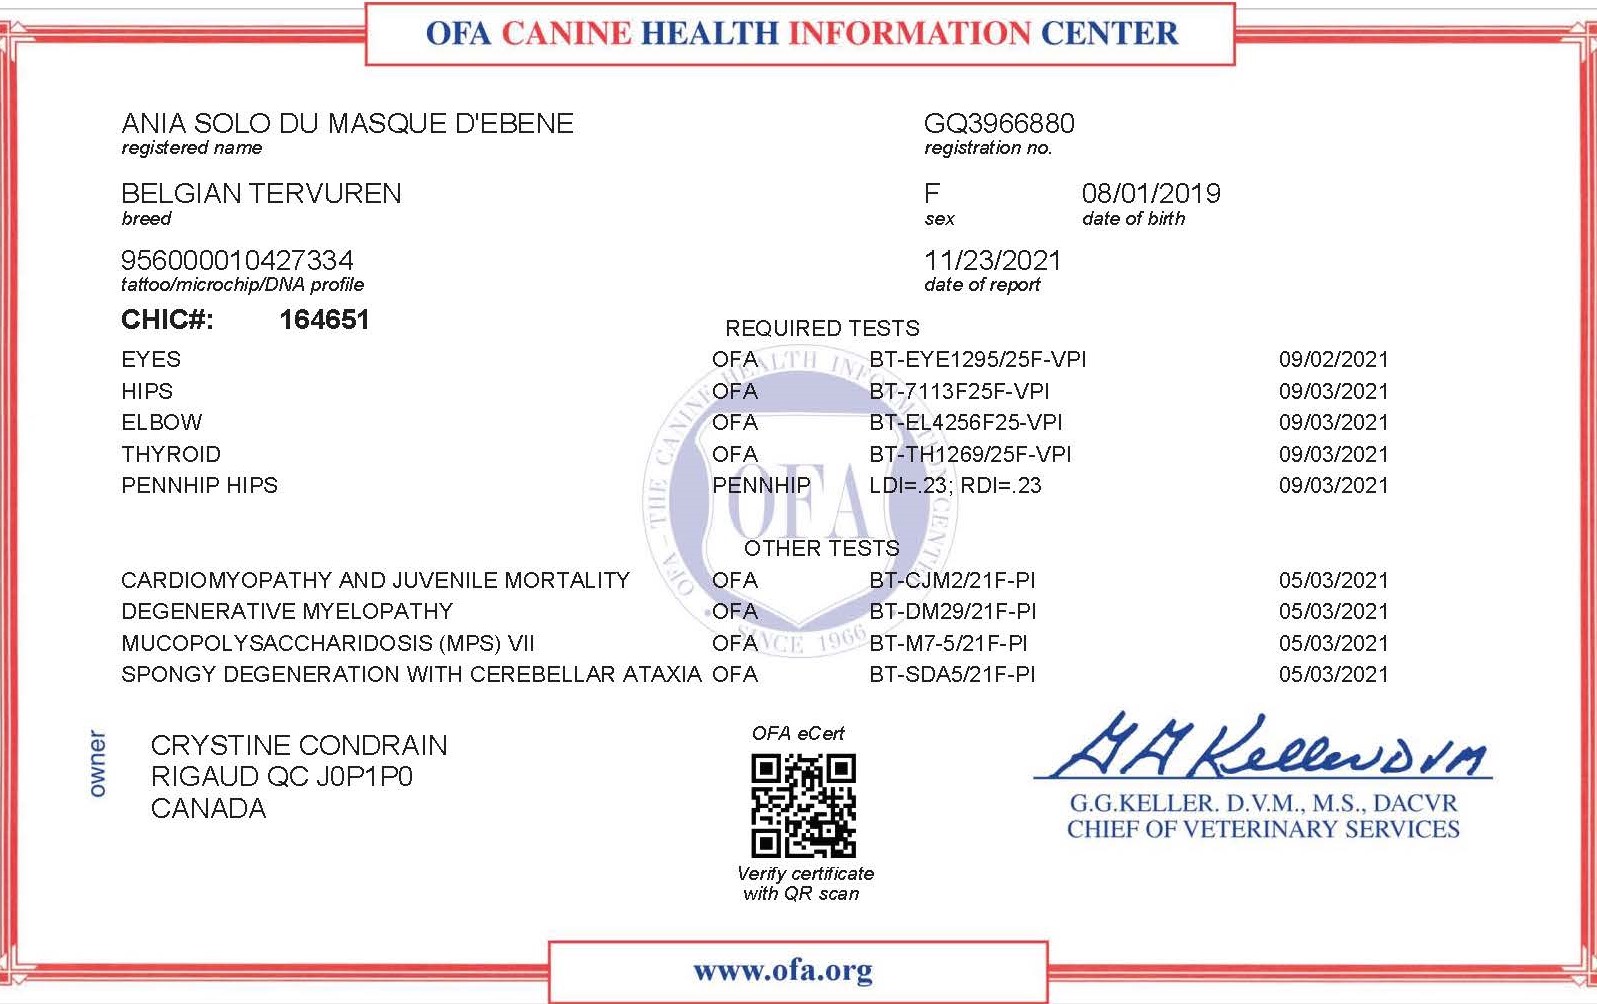 ANIA SOLO DU MASQUE D_EBENE CANINE HEALTH INFORMATION CENTER - CHIC